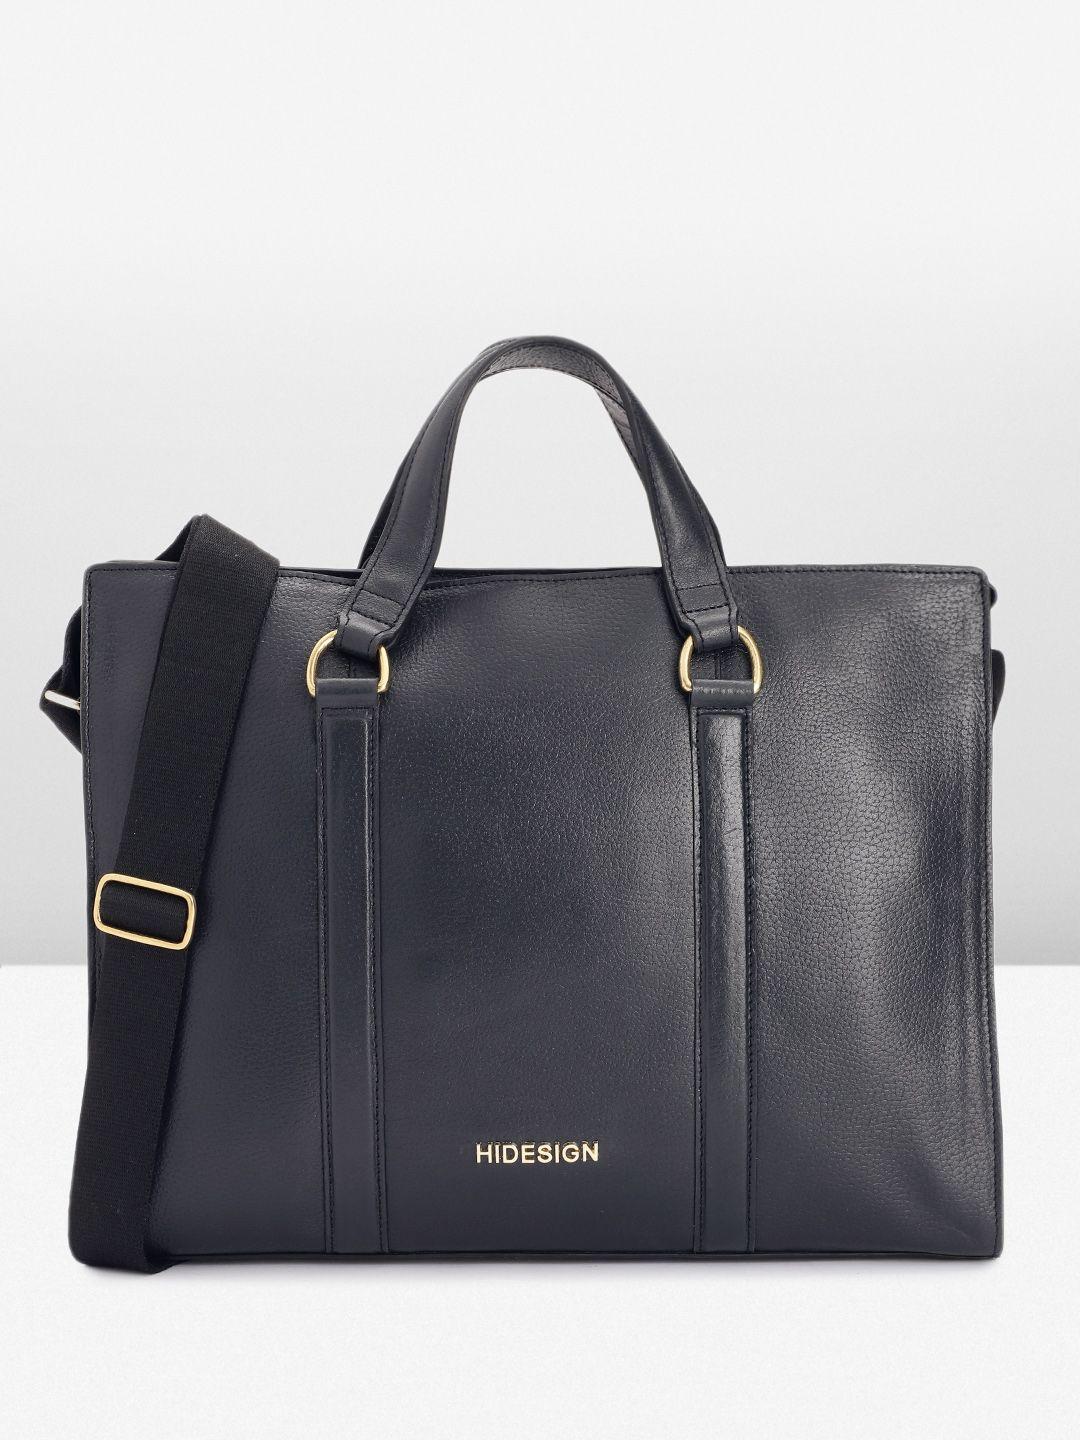 hidesign men solid insead leather laptop bag